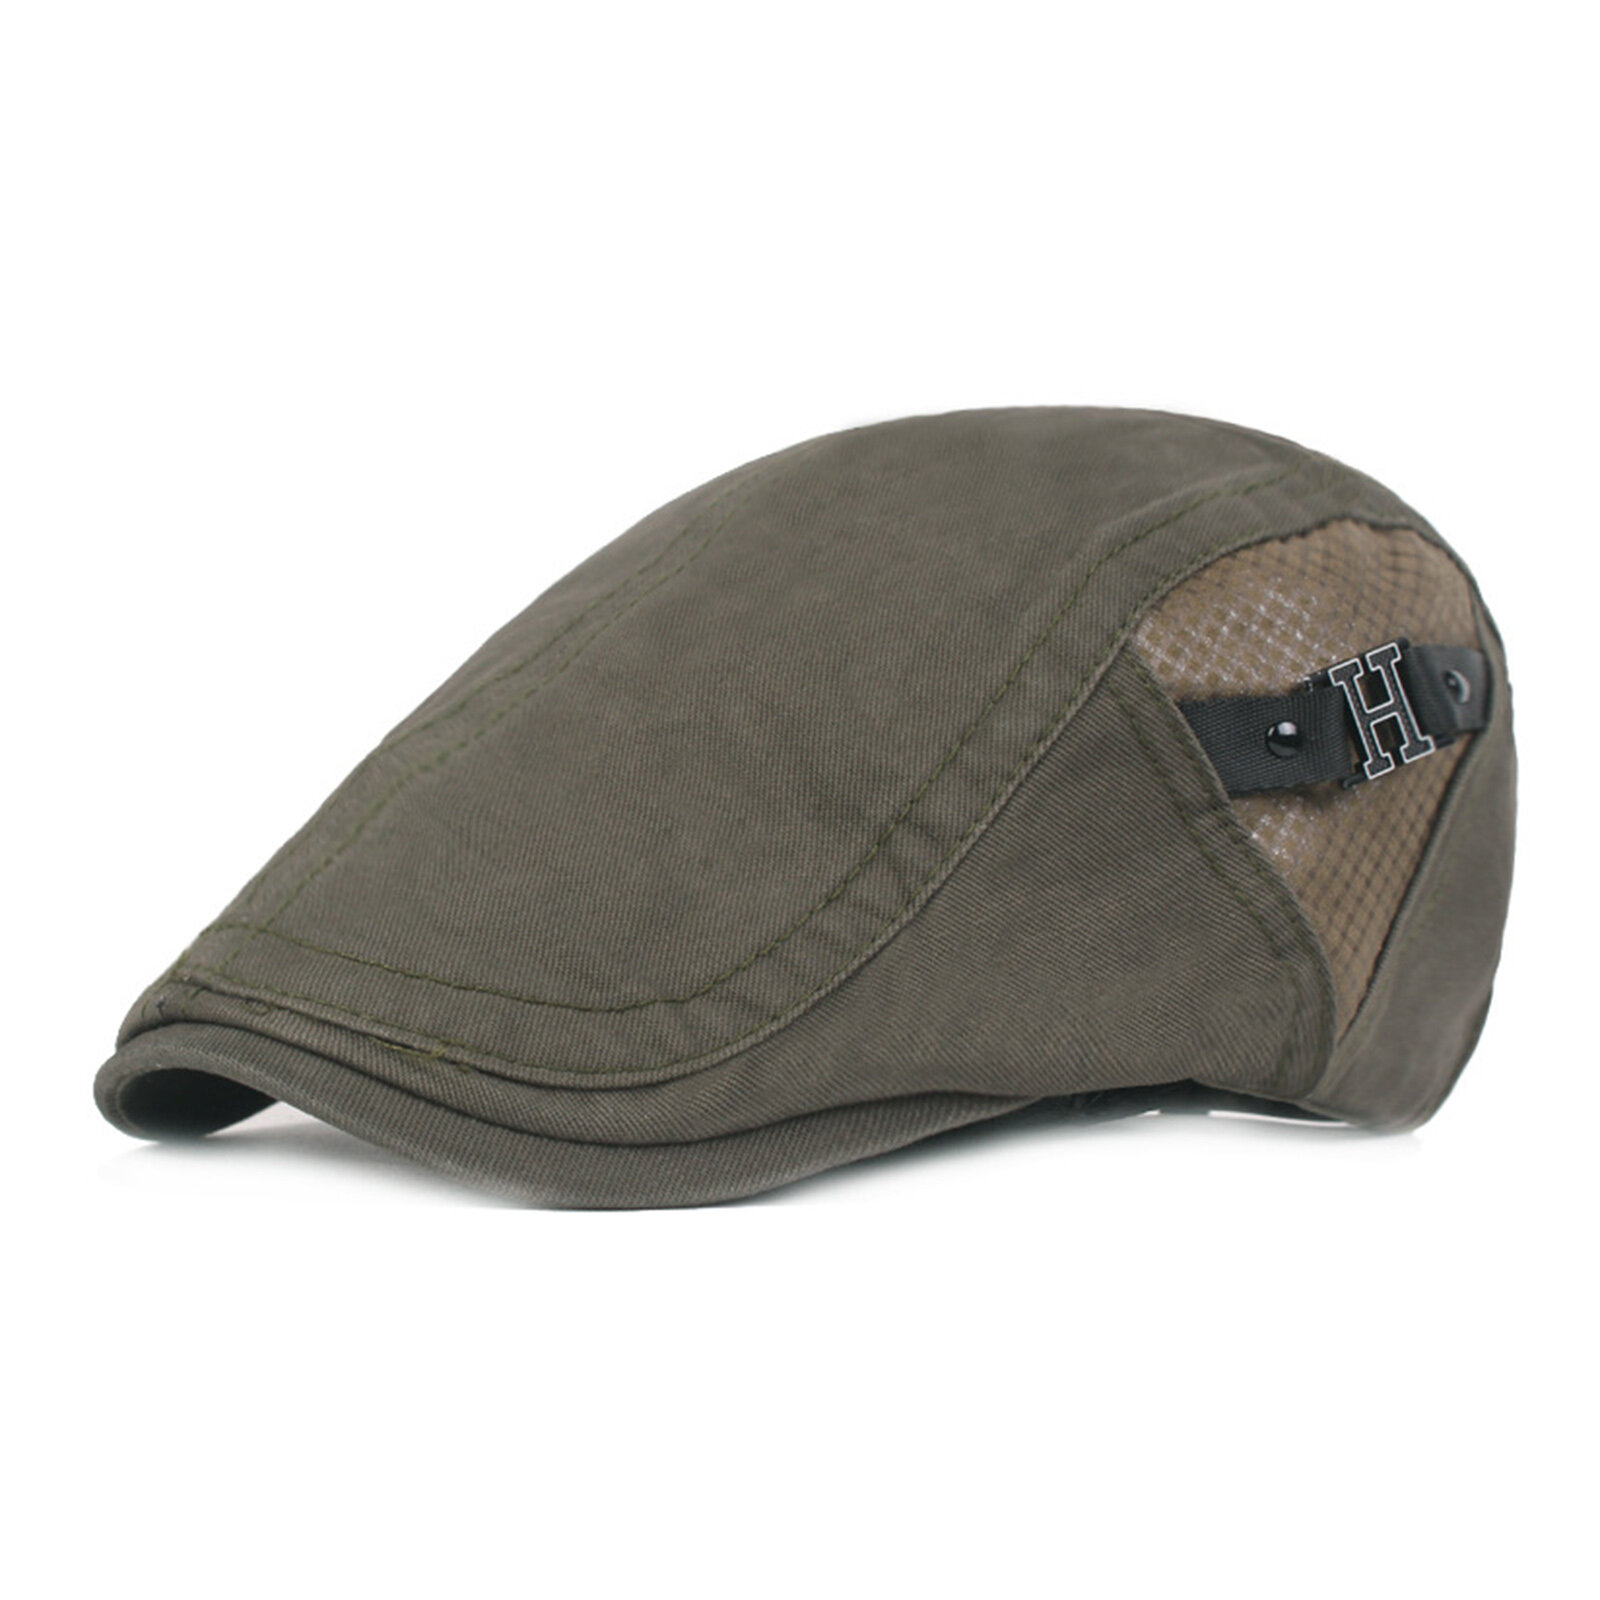 Menico Men's Cotton Visor Short Brim Casual Vintage Edgy Hat Beret Flat Cap